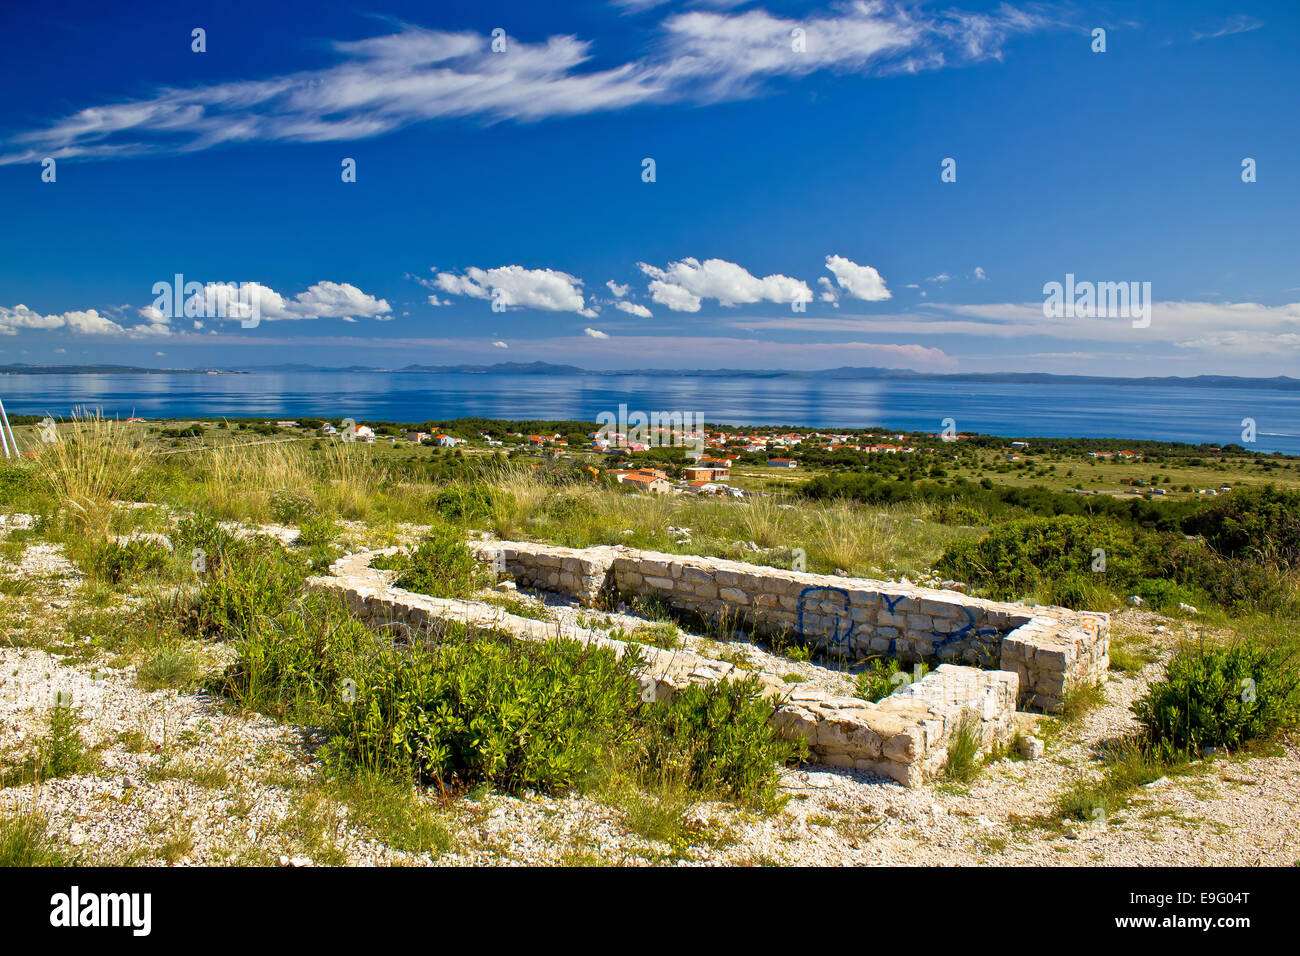 Island of Vir church ruins Stock Photo